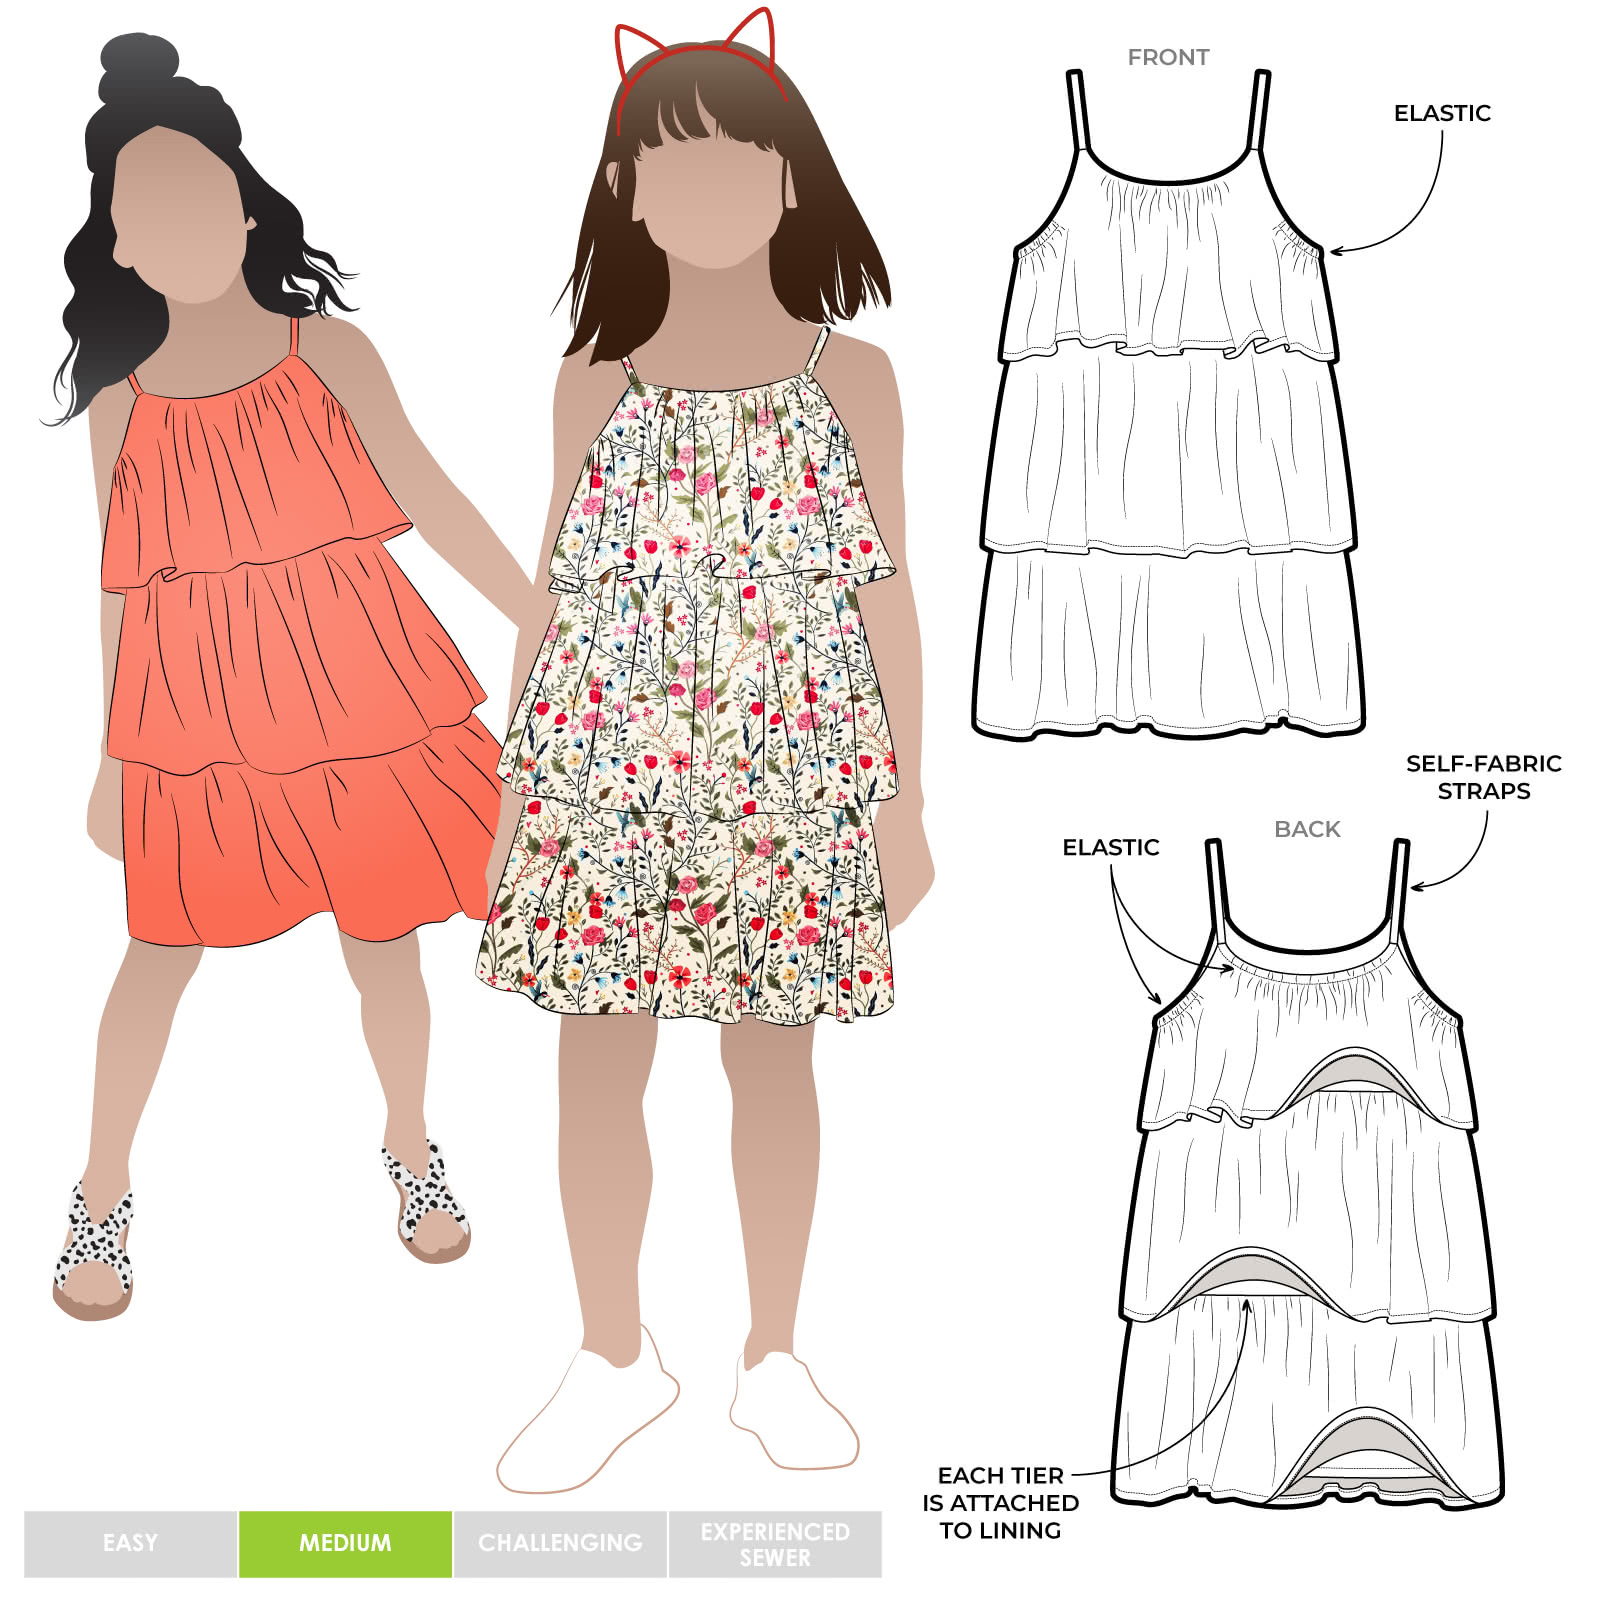 Children's Party Dress Pattern FREE - MHS Blog